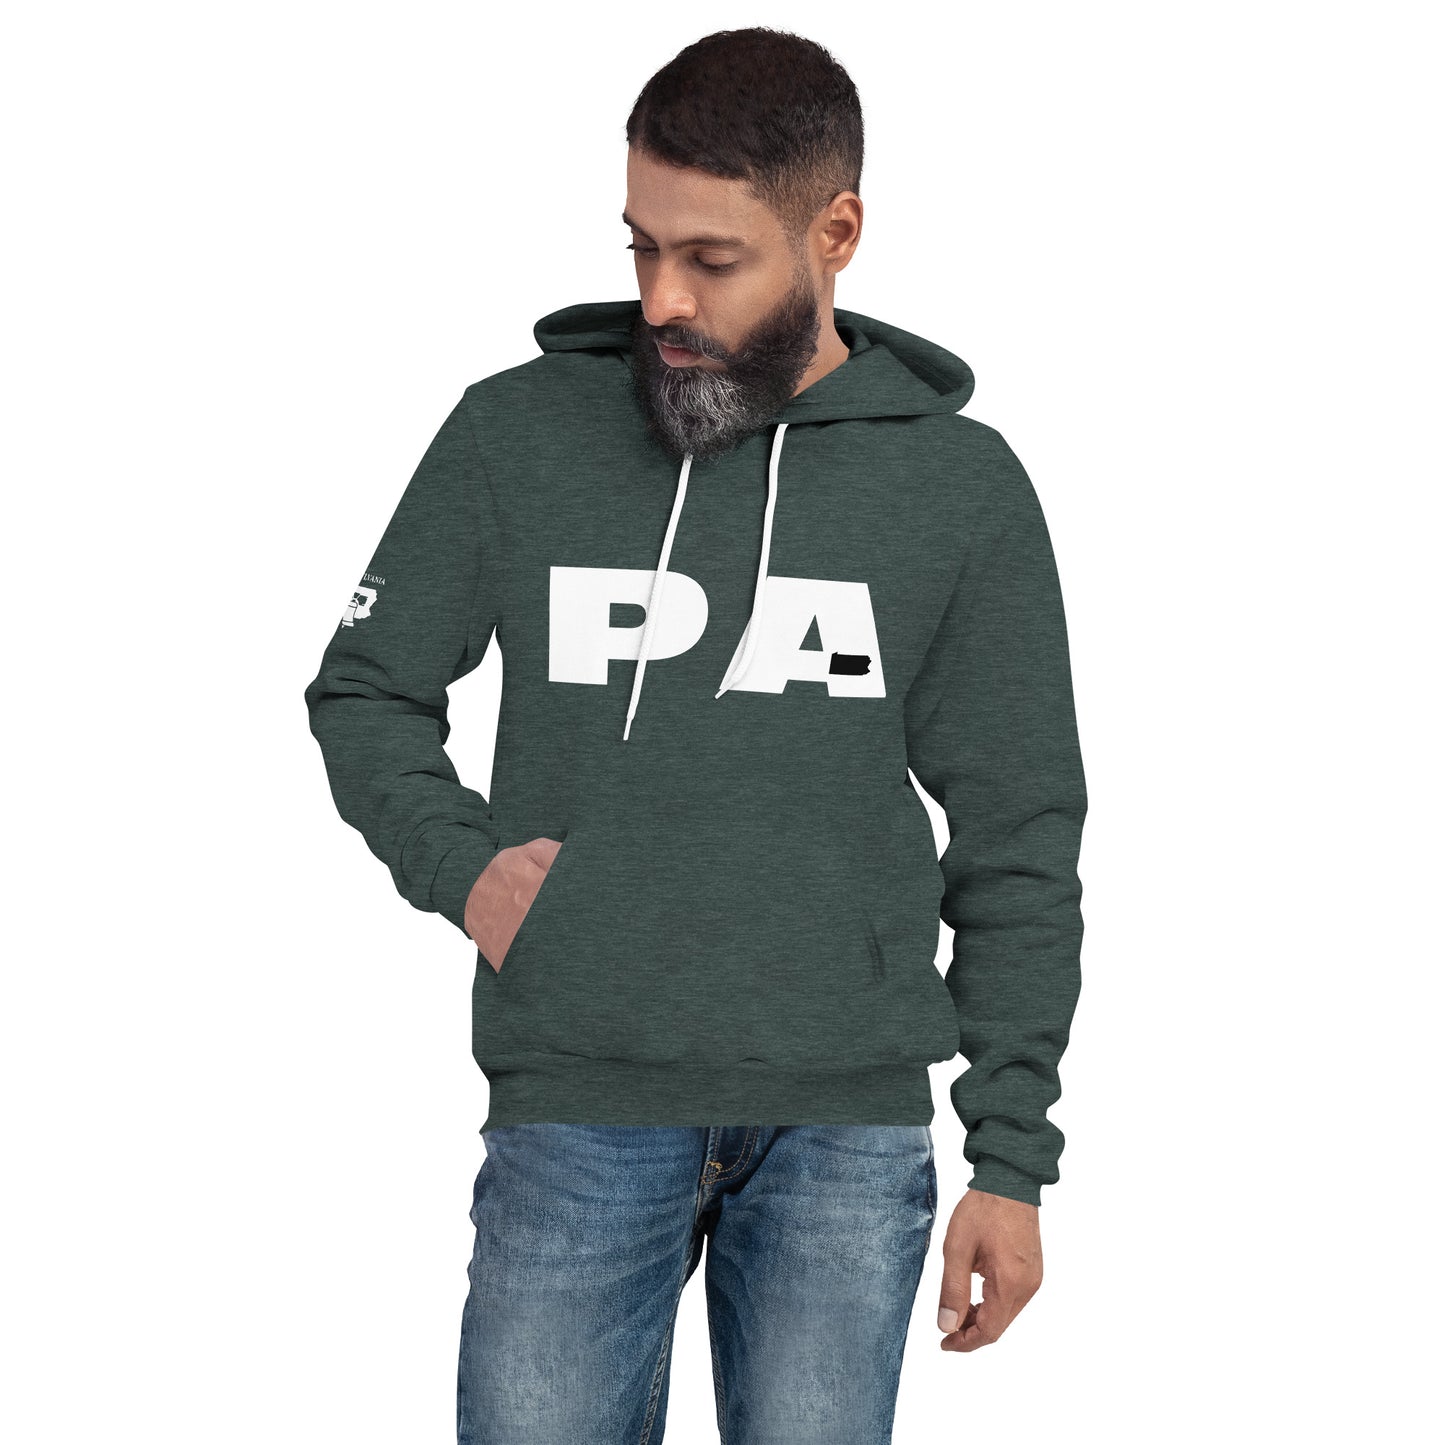 Unisex hoodie - PA (Pennsylvania)